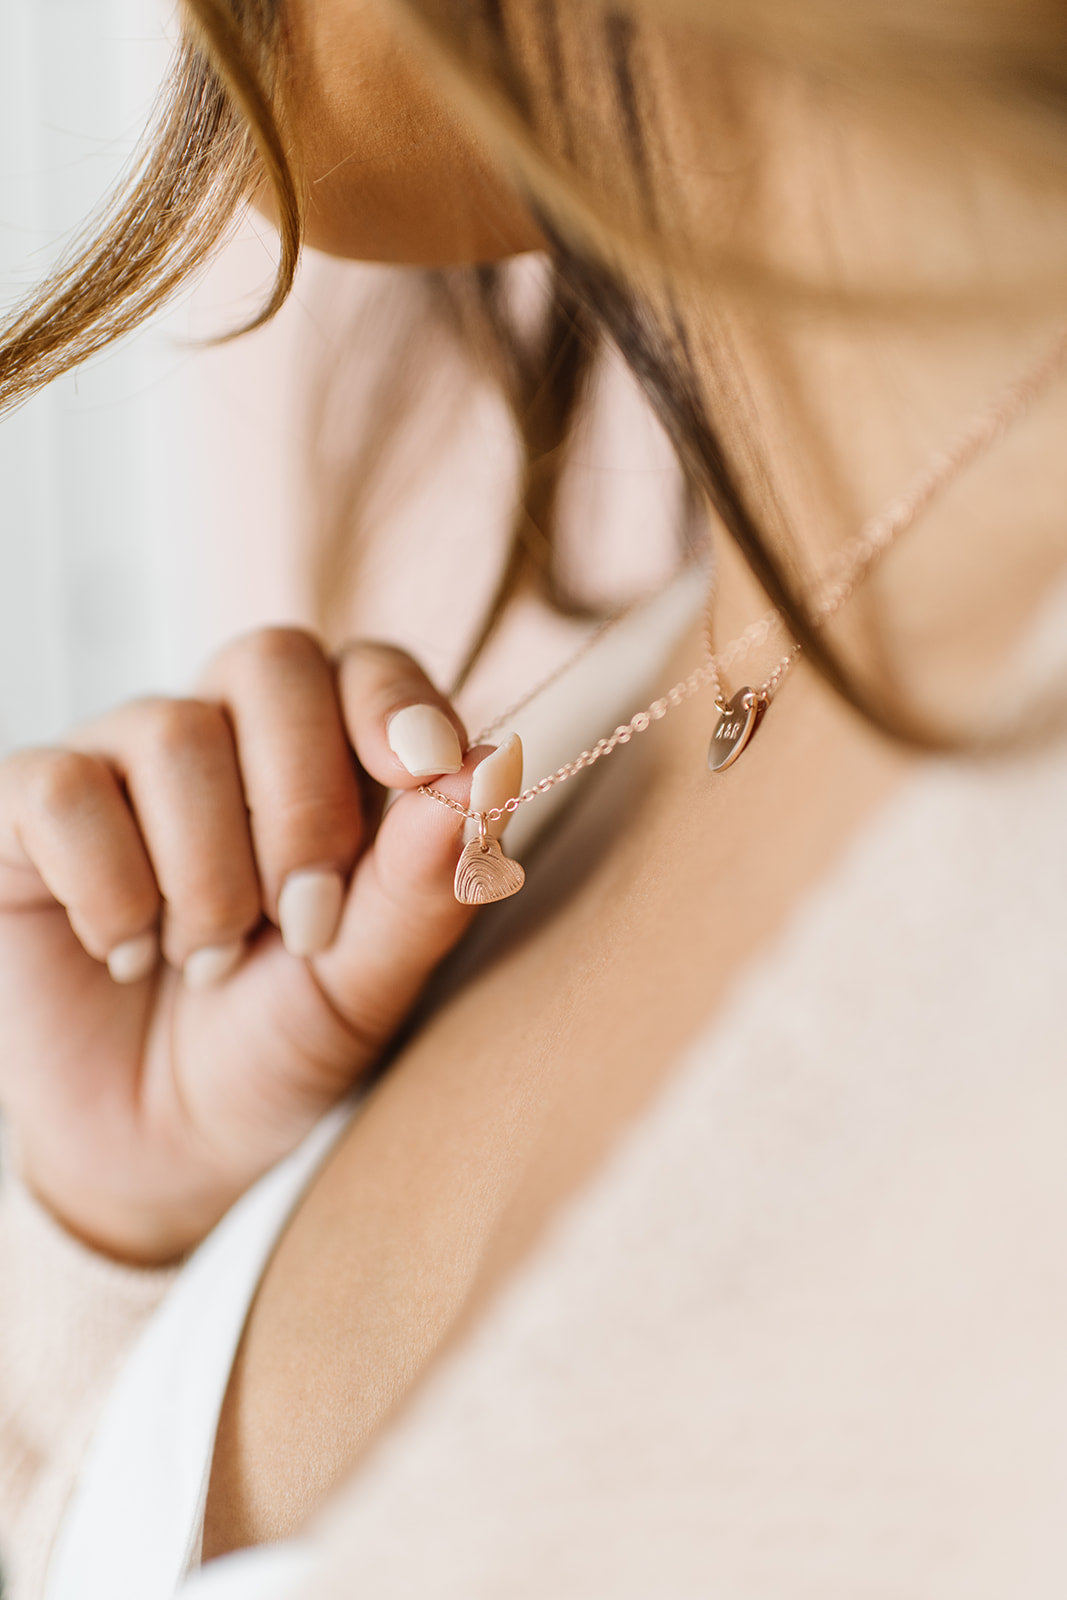 fingerprint heart pendant necklace made in Canada